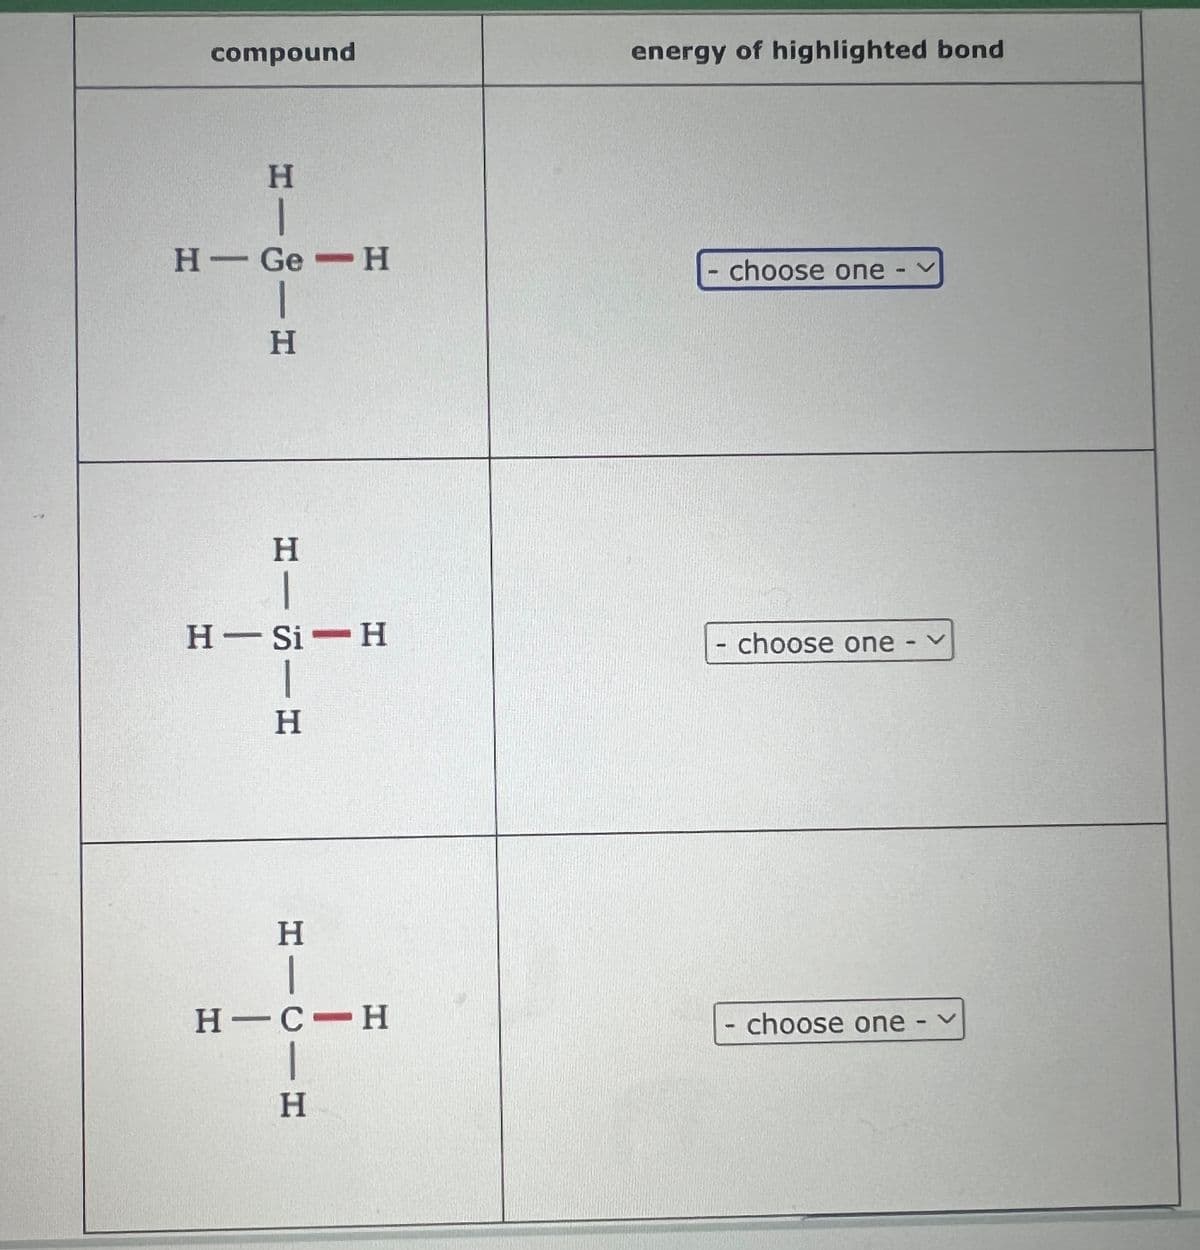 compound
HIG
H-Ge H
H
energy of highlighted bond
choose one
22
H-Si H
choose one
HIS H
H
H-C-H
-H
63755
choose one - v